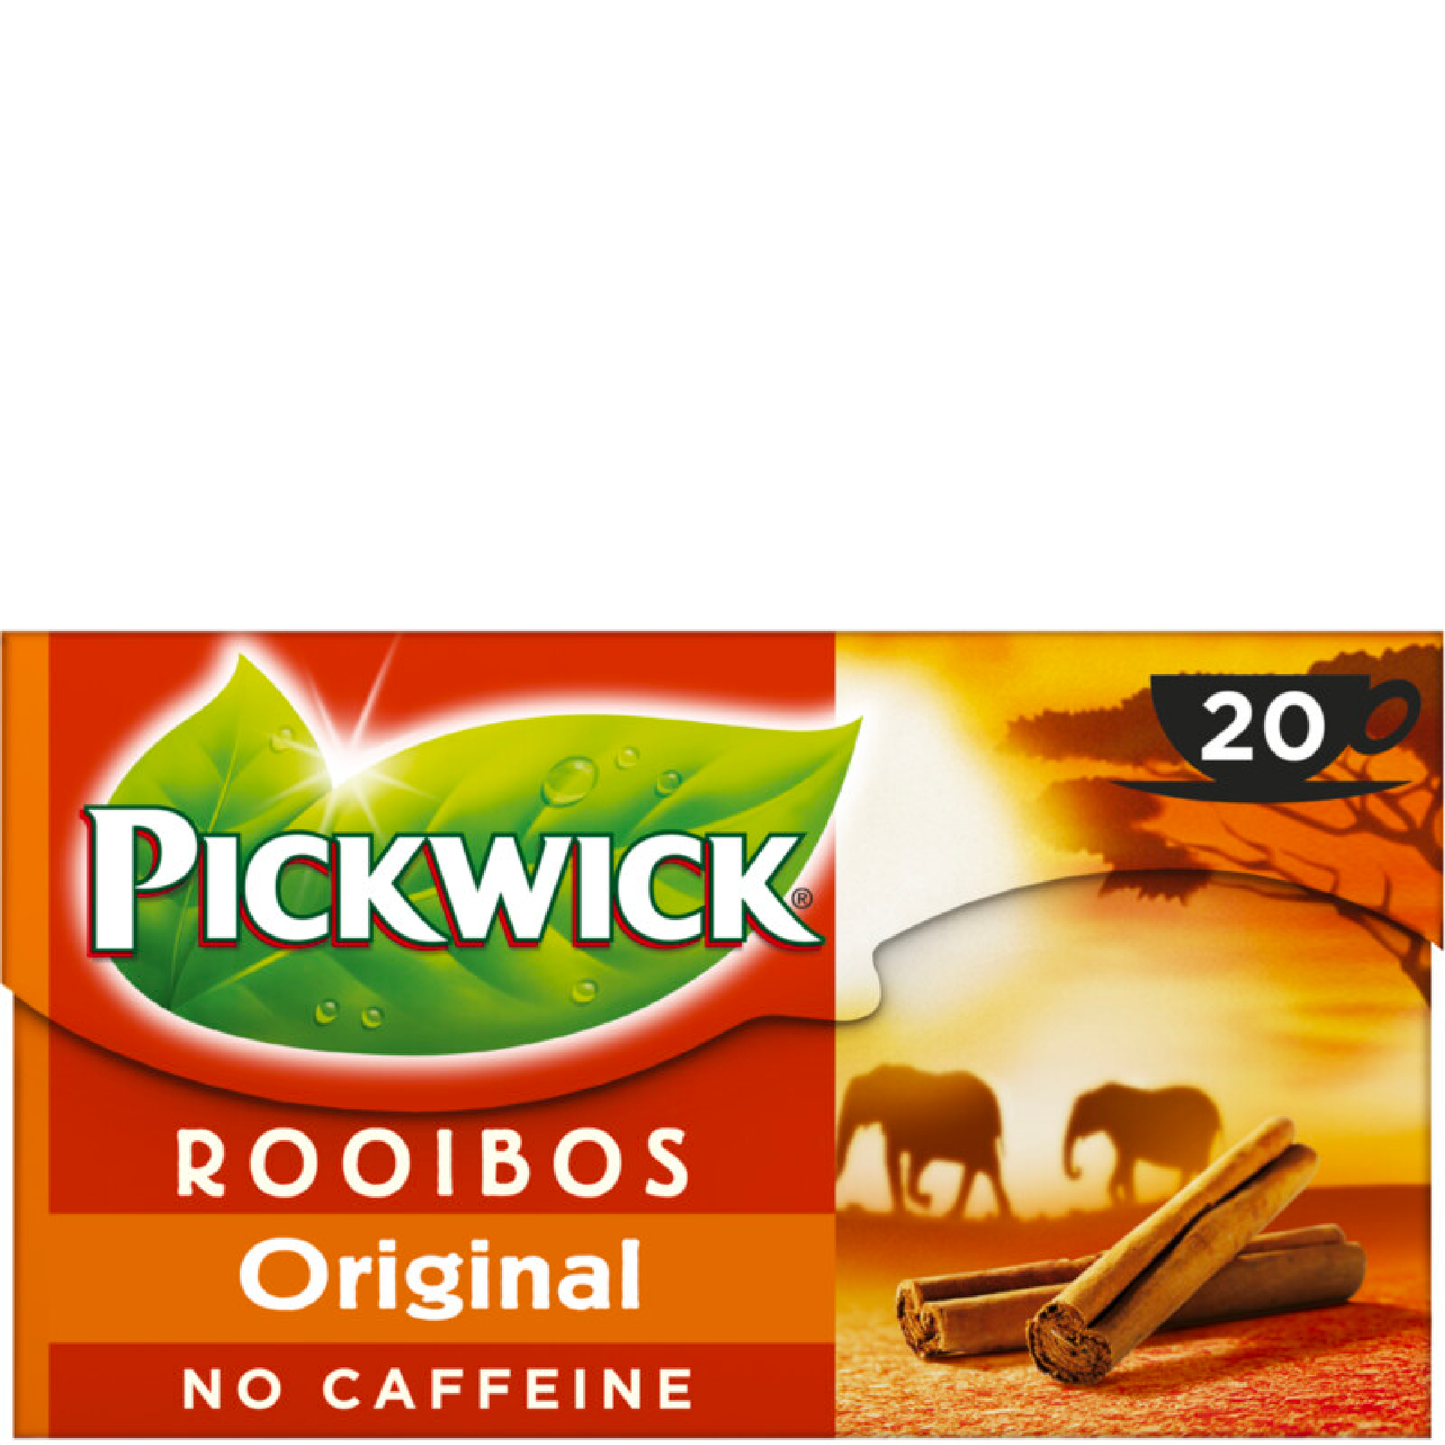 Pickwick Rooibos Original No Caffeine